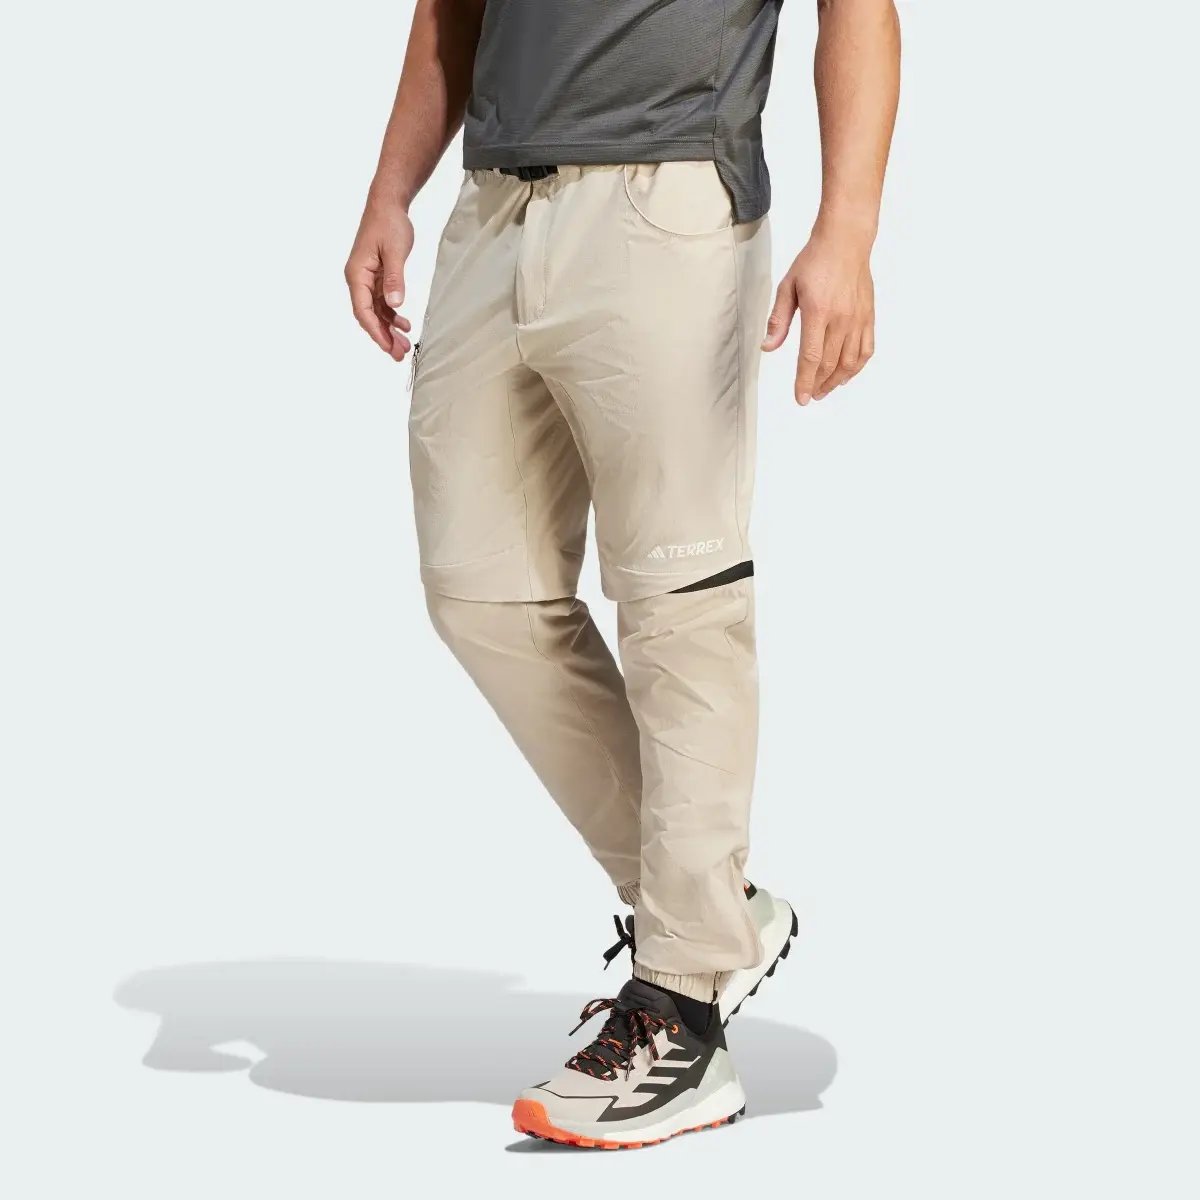 Adidas Terrex Utilitas Hiking Zip-Off Pants. 1